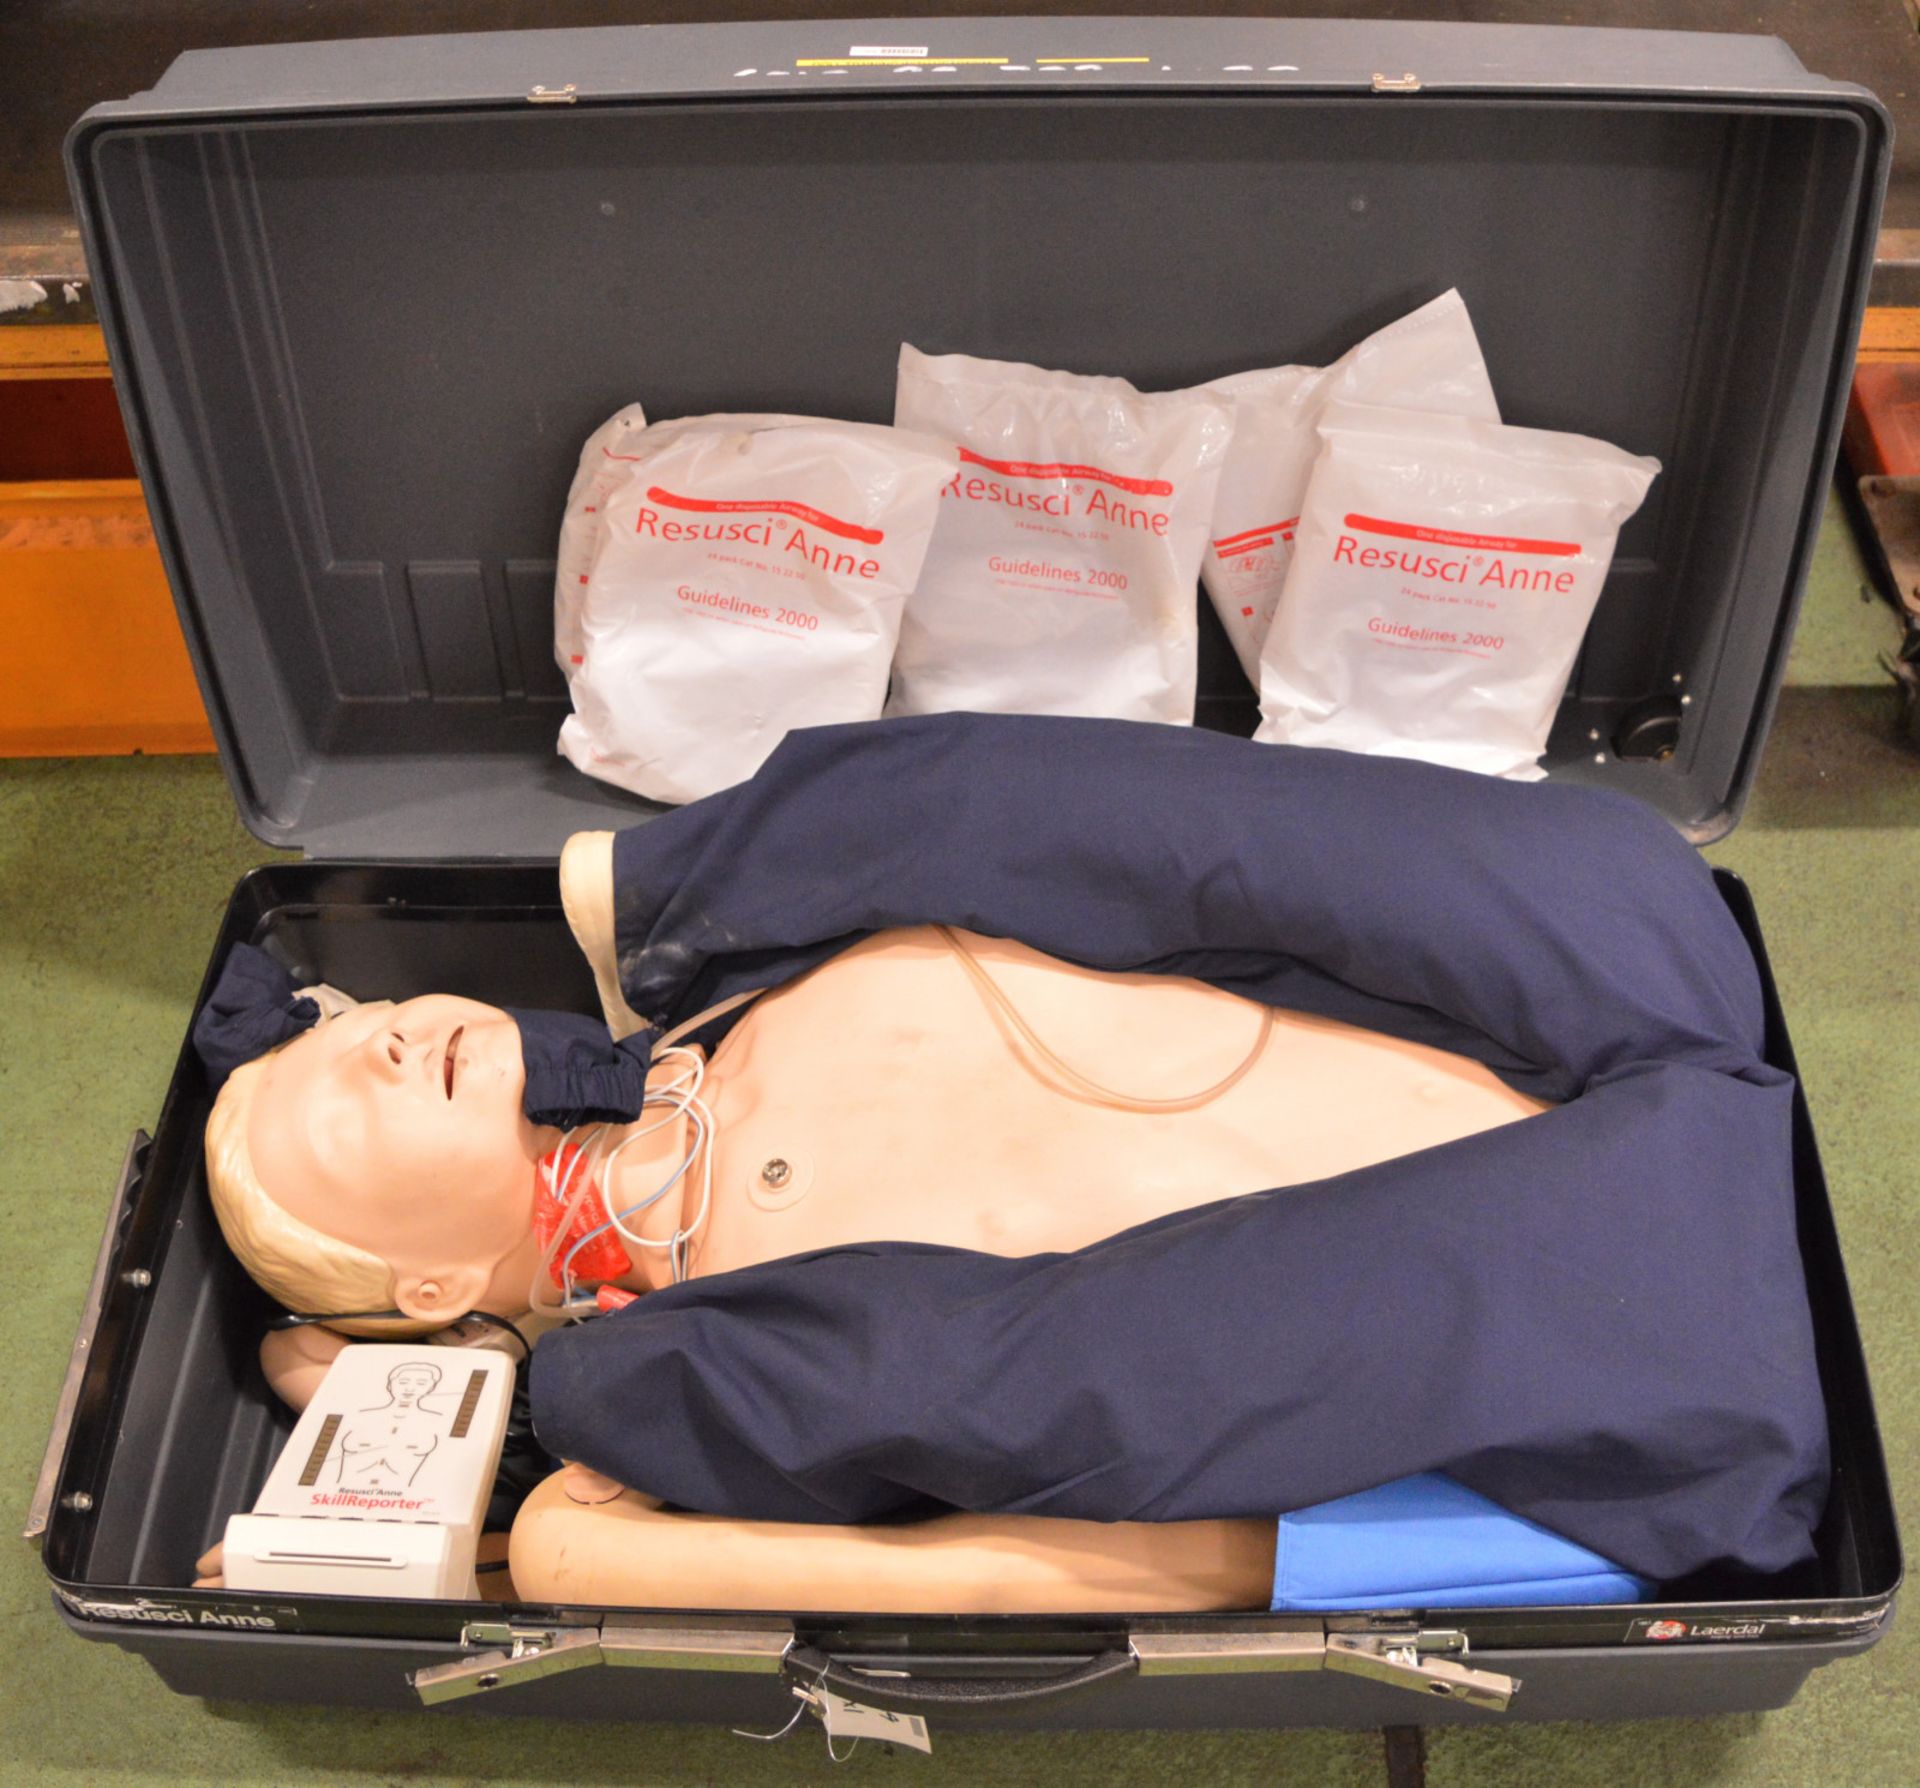 Resusci Anne Resuscitation Doll with Heartsim - NSN 6910-99-723-4032.